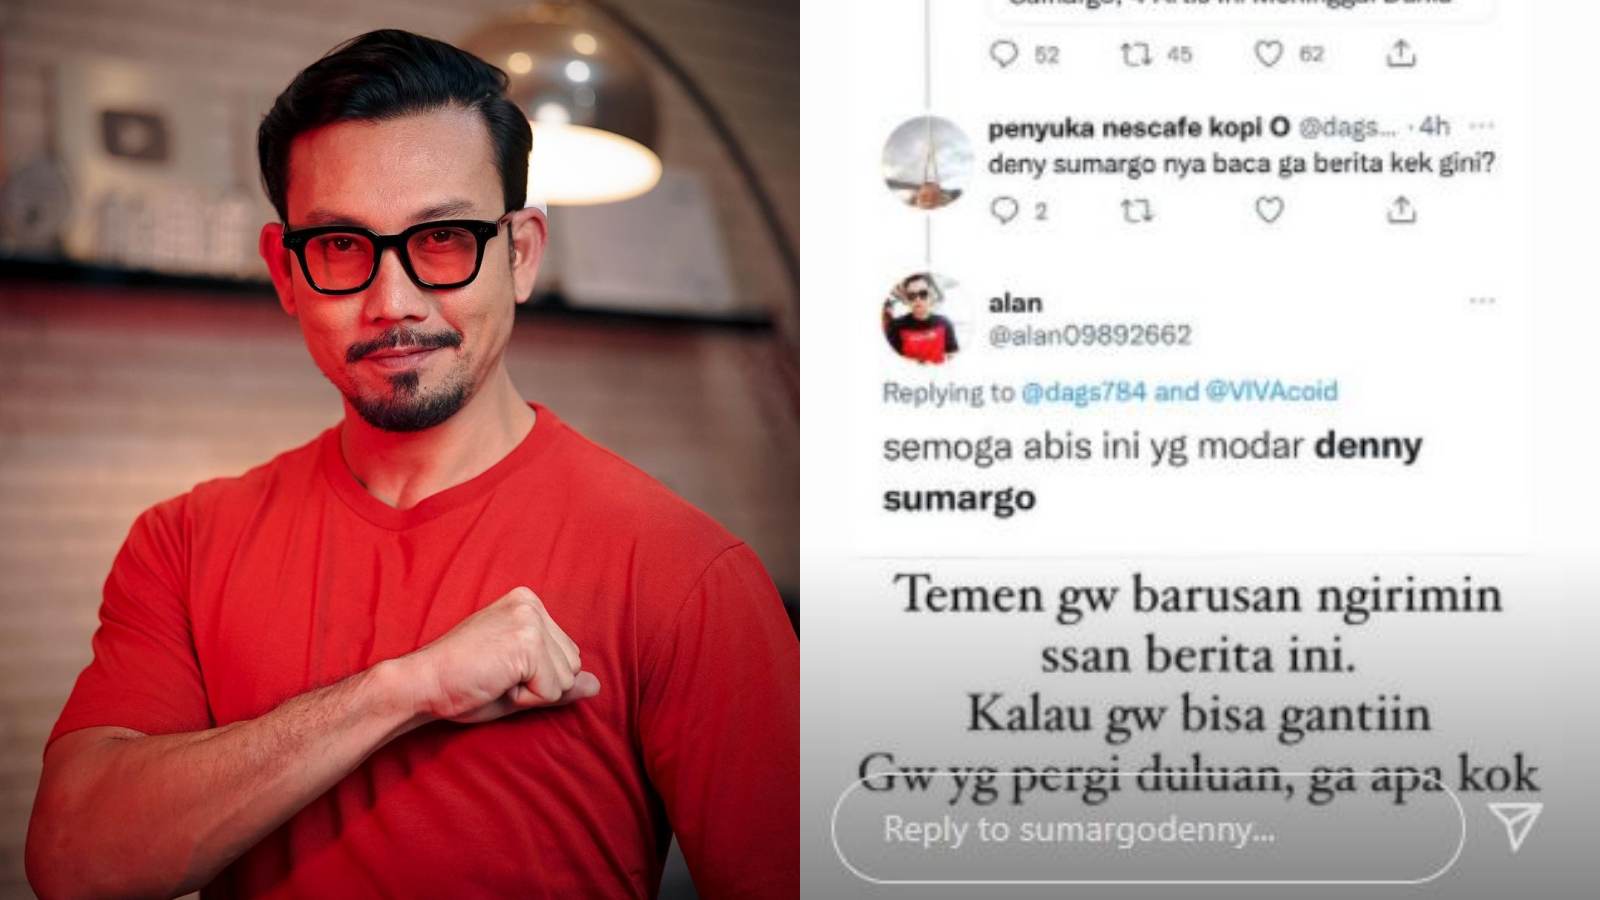 4 Artis Meninggal Usai ke Podcastnya, Denny Sumargo: Kalau Bisa Gantiin Gue yang Pergi Duluan Gak Apa Kok